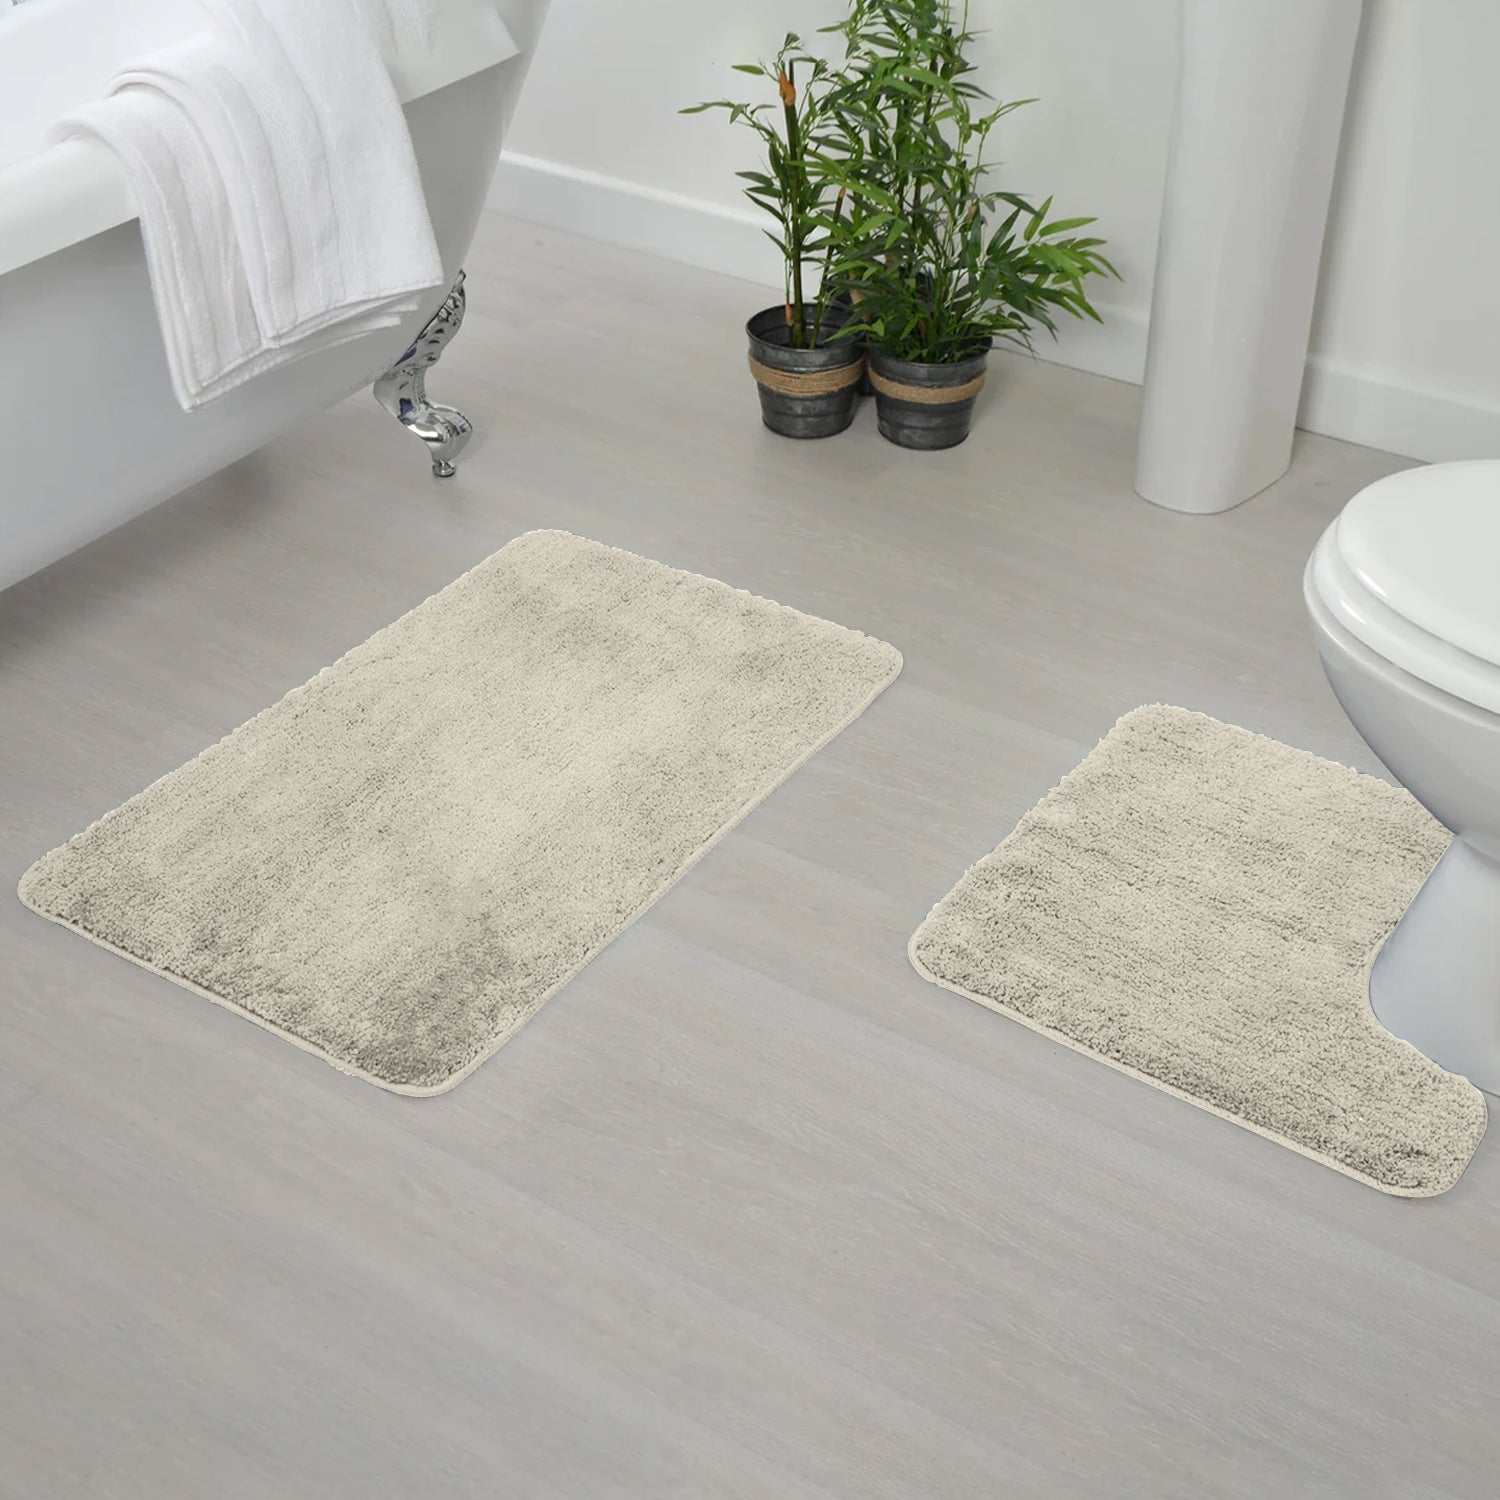 bath mats for bathroom sets 2 piece